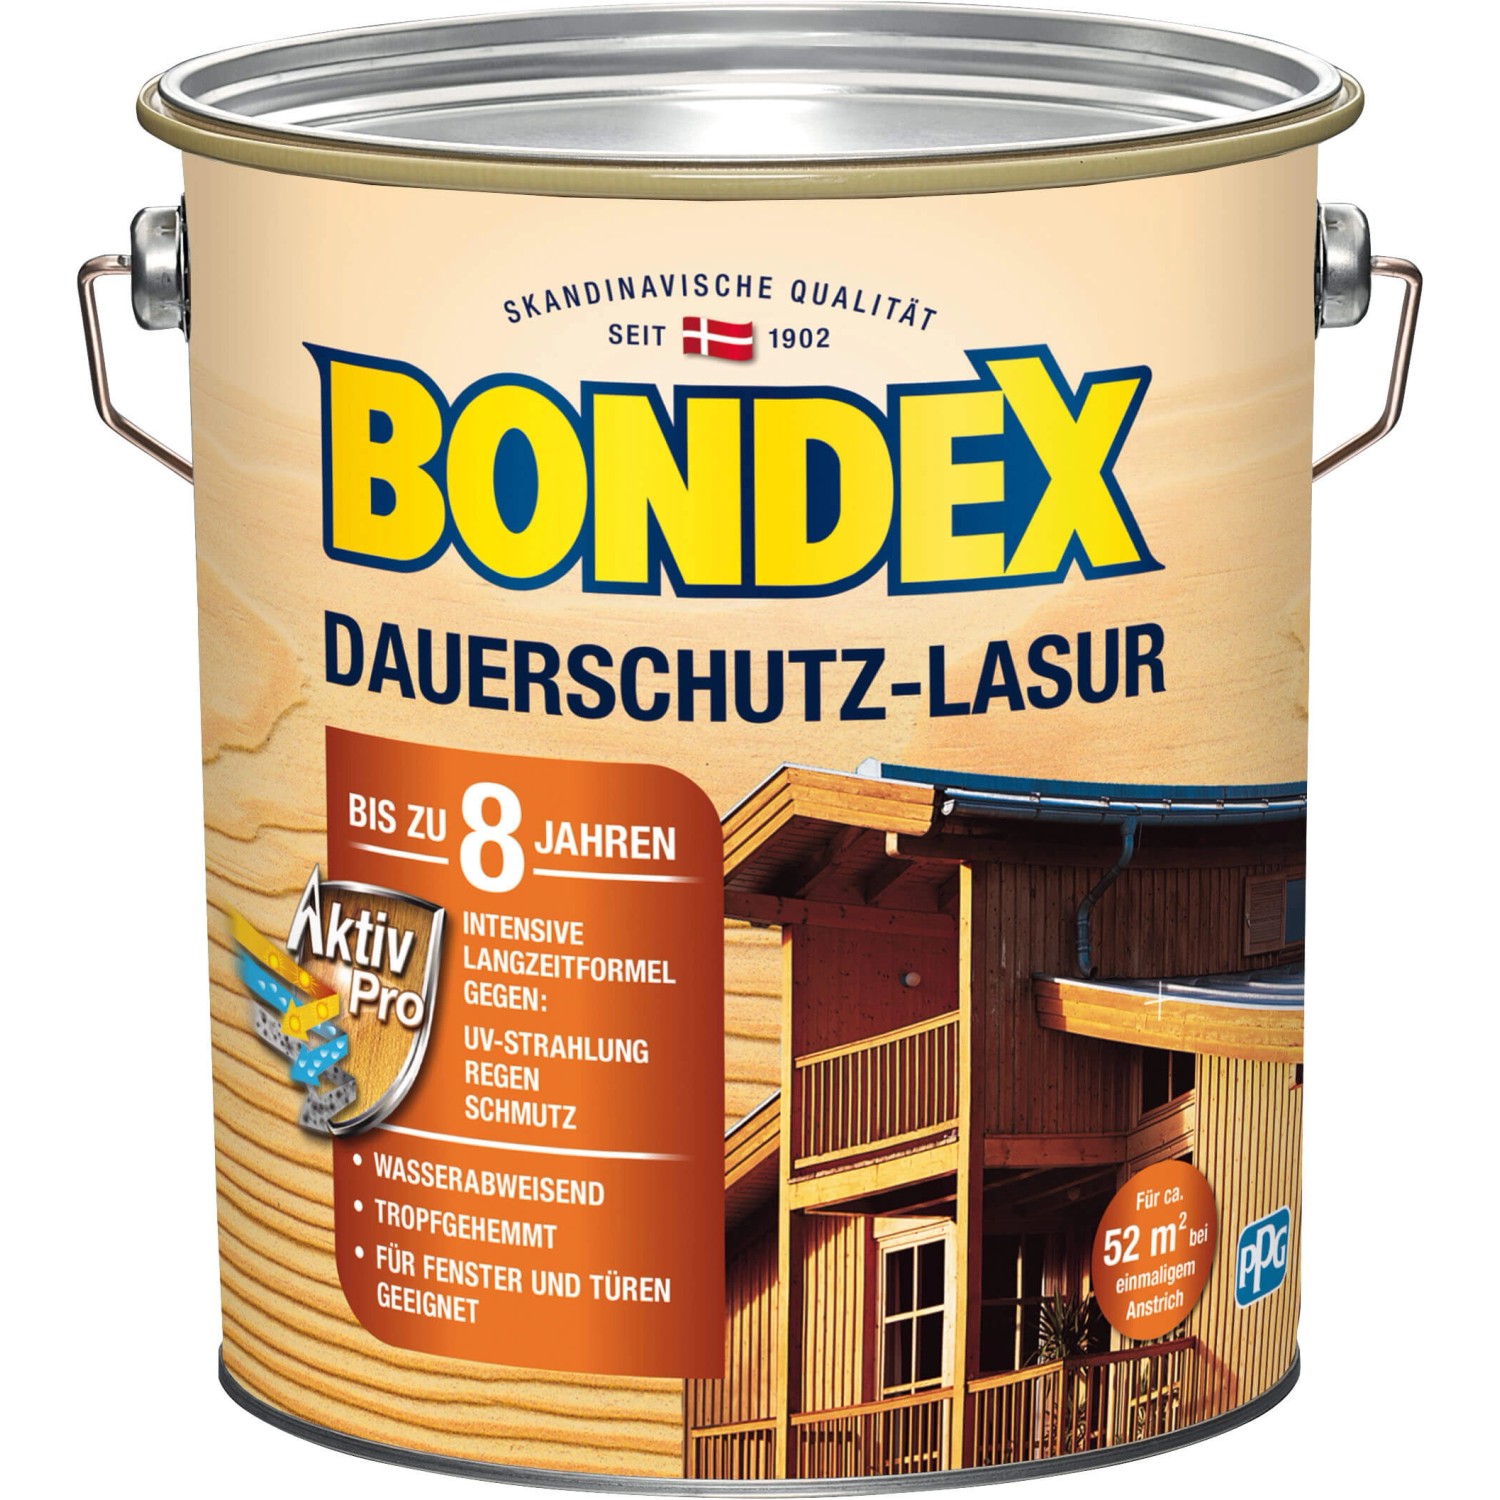 Bondex Dauerschutz-Lasur Kiefer 4 l von Bondex